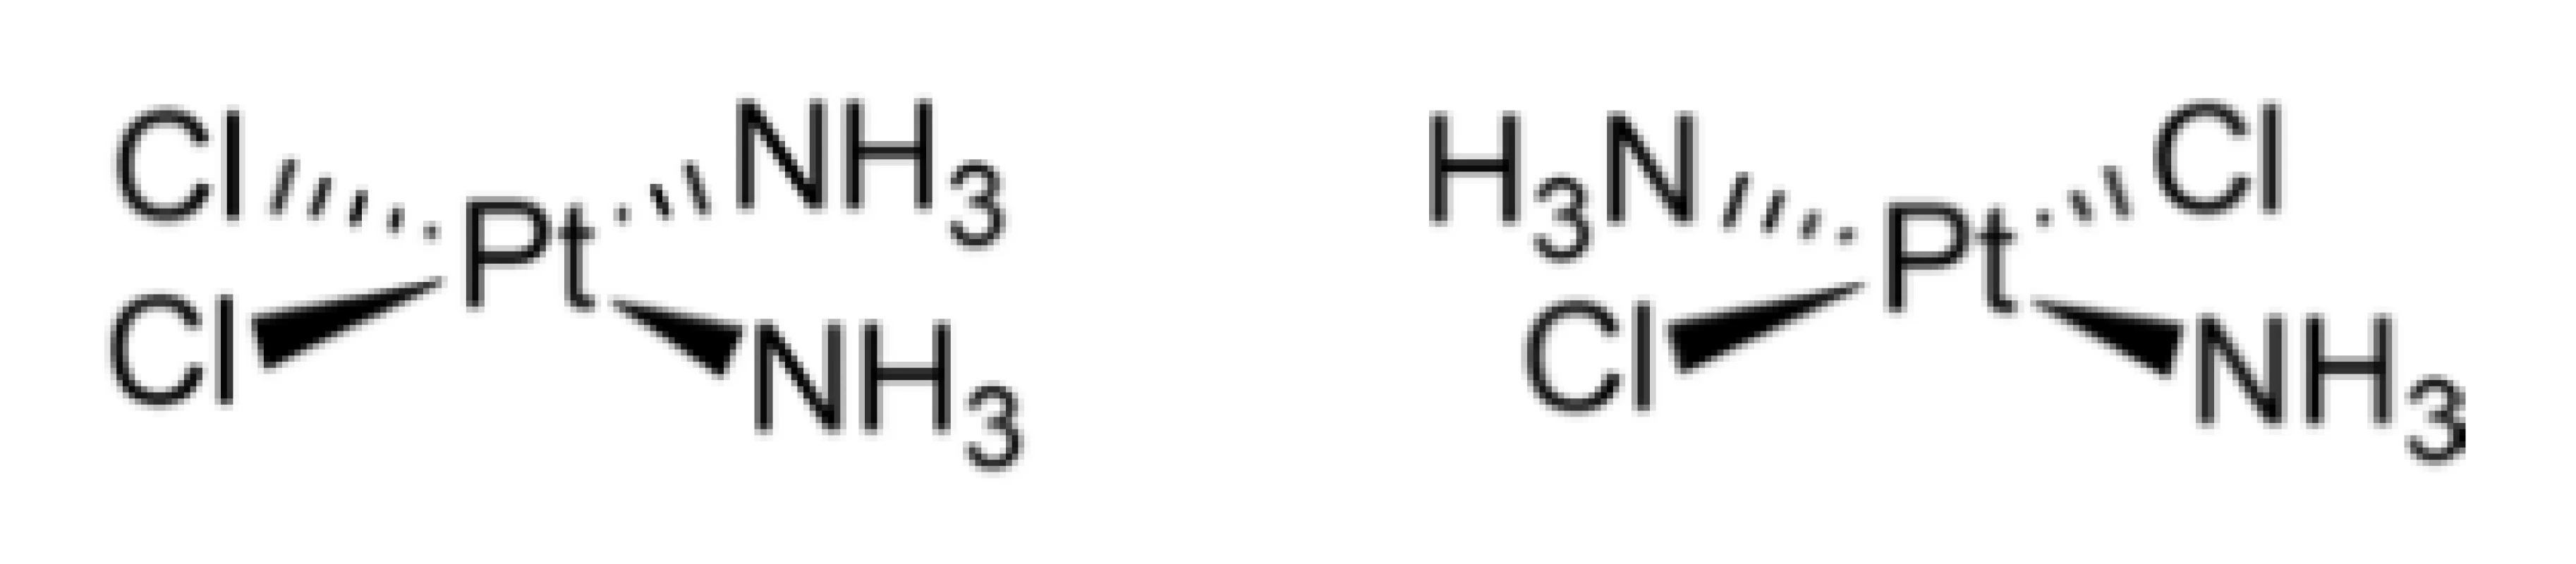 Štruktúra oboch stereoizomérov diammindichloridoplatnatého komplexu – cisplatiny (vľavo) a transplatiny (vpravo)